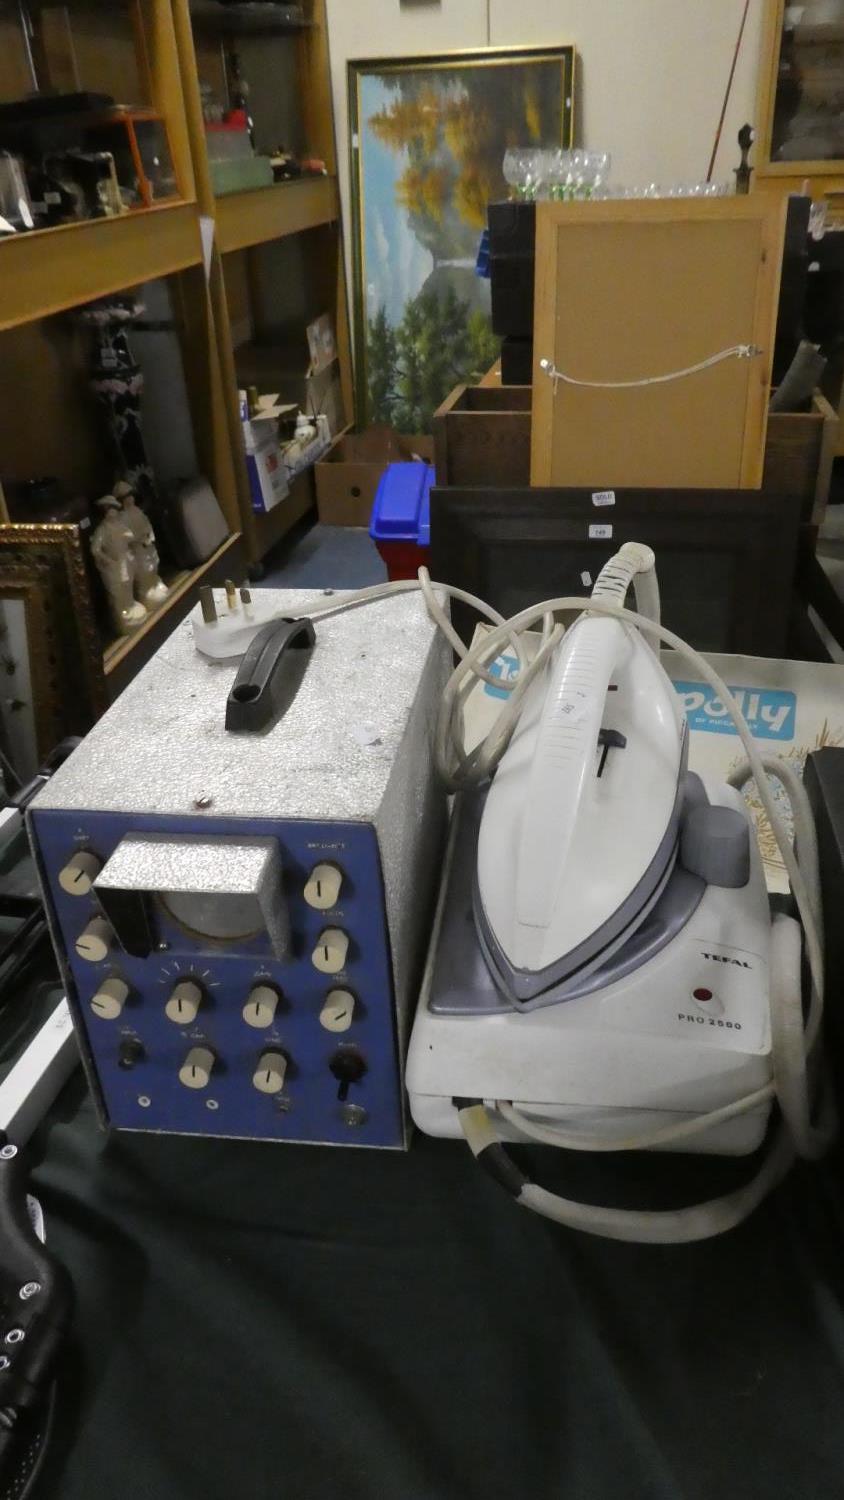 A Vintage Oscillator and a Tefal Steam Iron